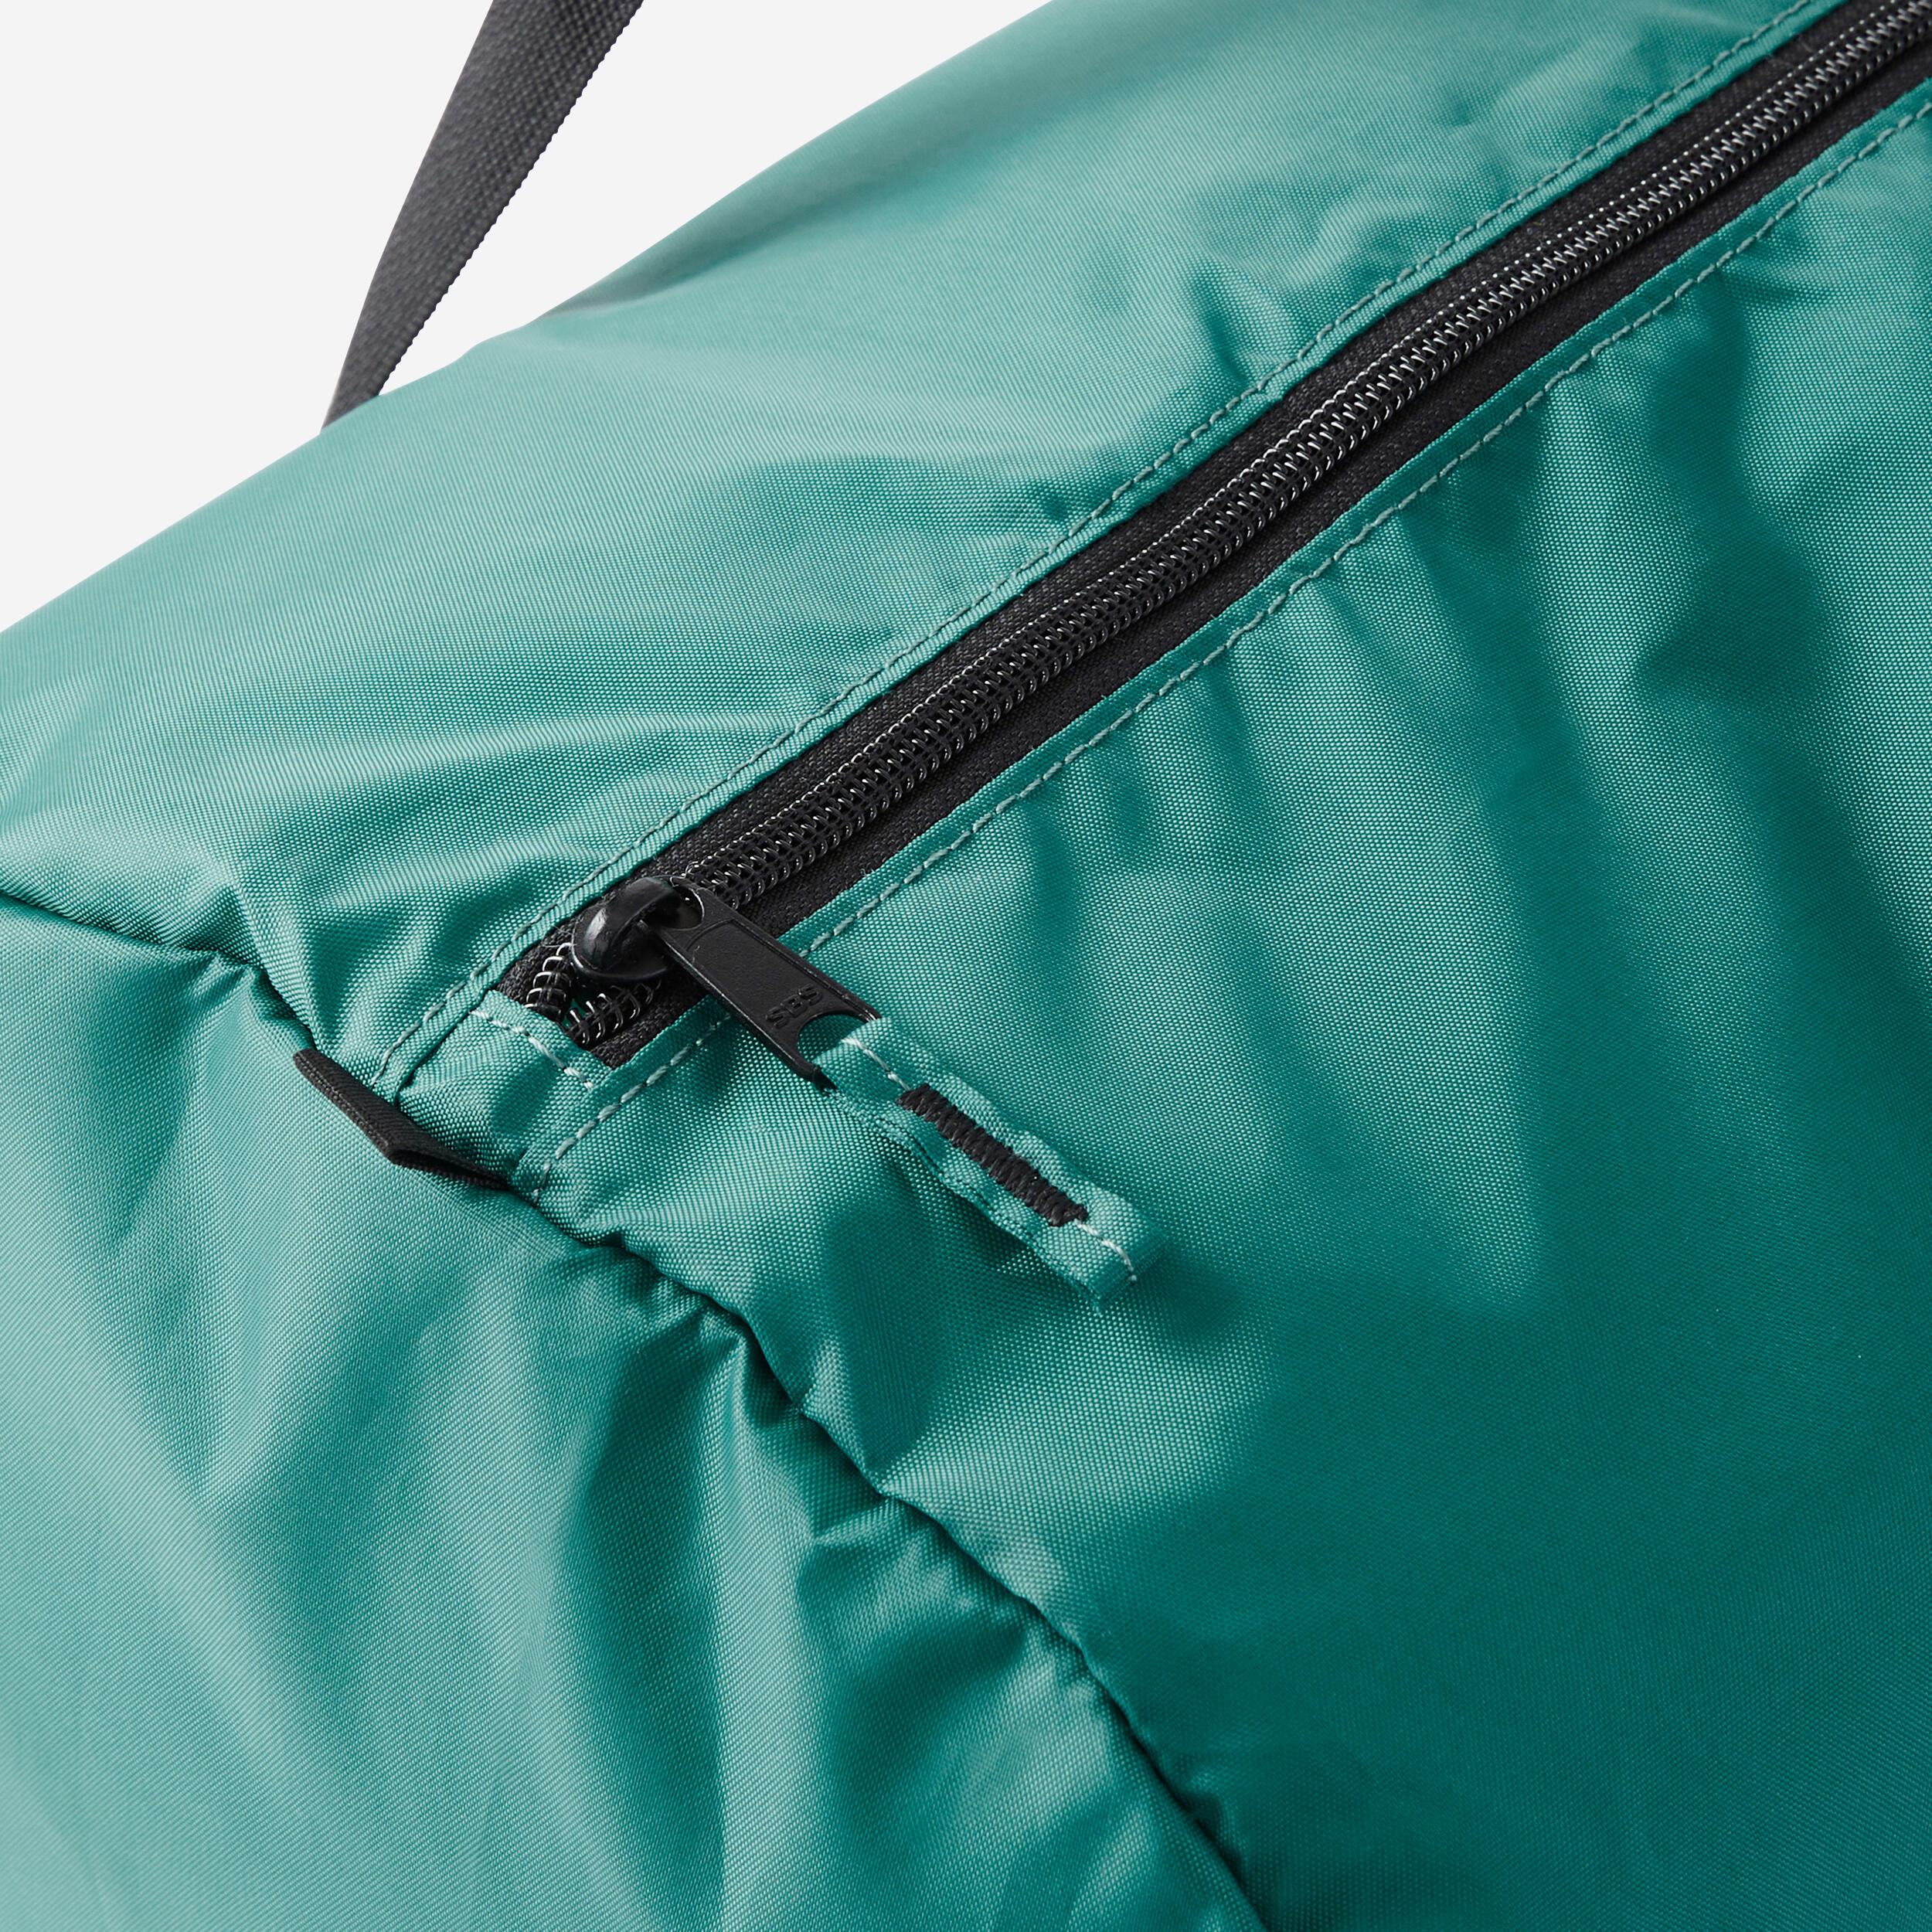 30 L Foldable Fitness Bag - Green 8/9